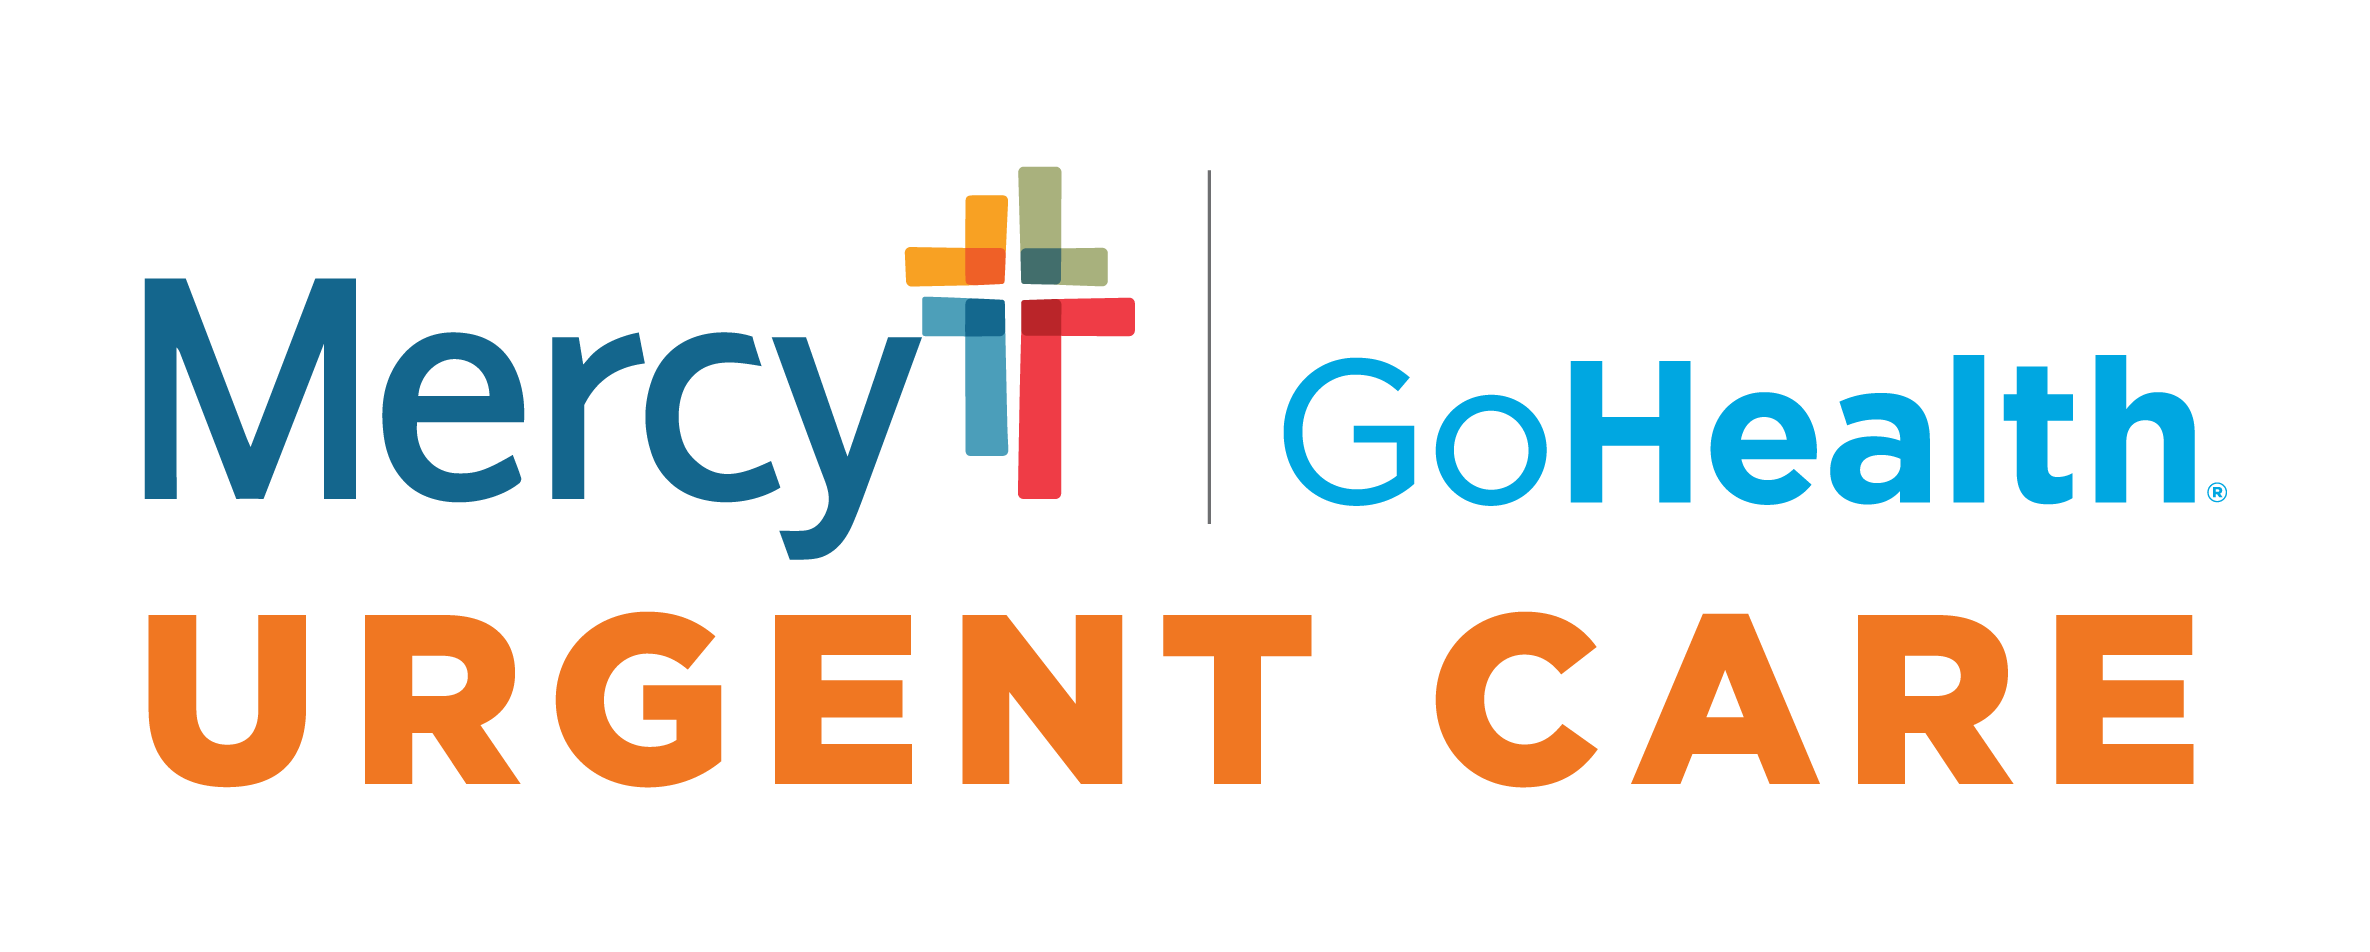 Mercy-GoHealth Urgent Care - Manchester Logo